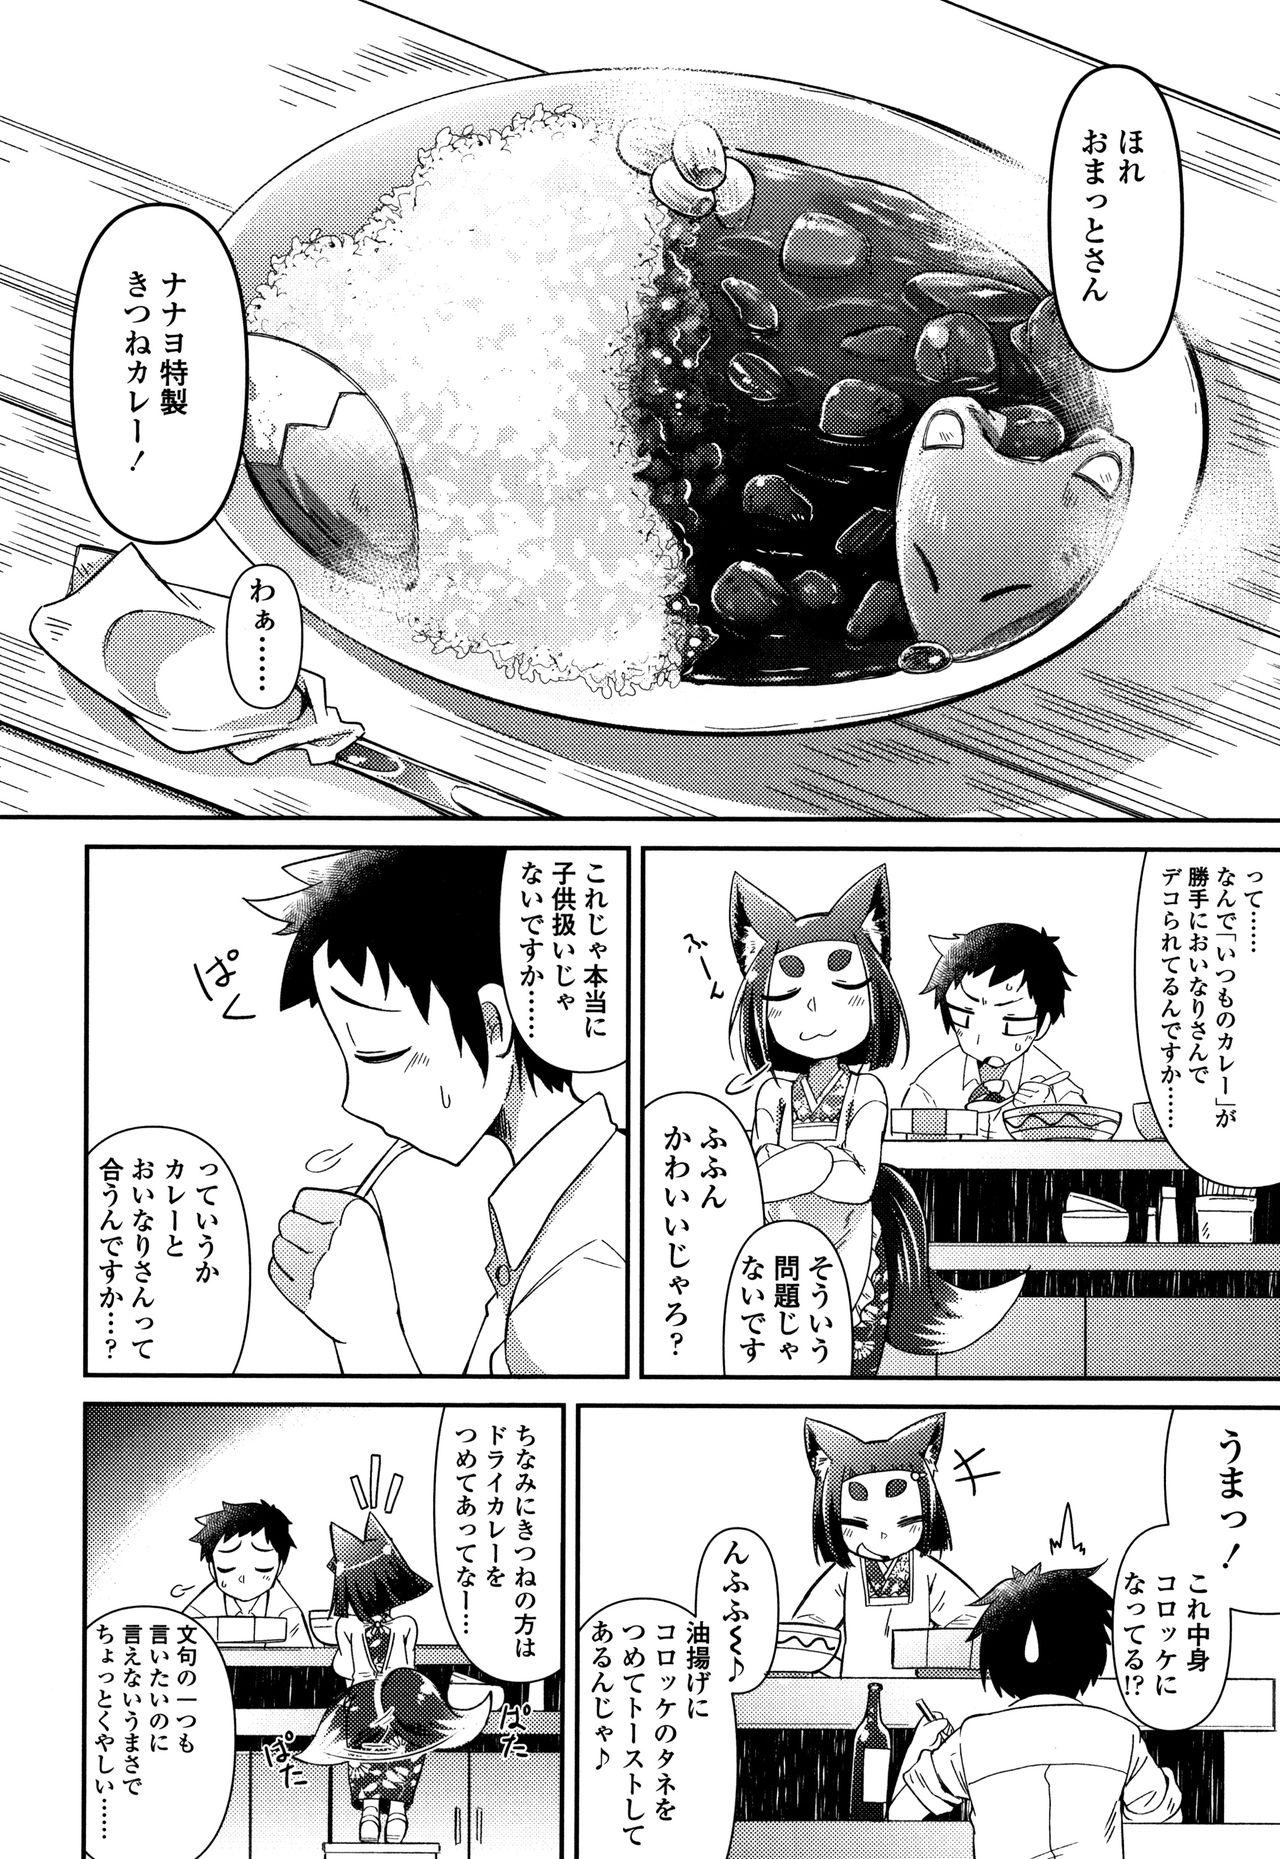 Harcore Youkai Koryouriya ni Youkoso - Welcome to apparition small restaurant Menage - Page 11